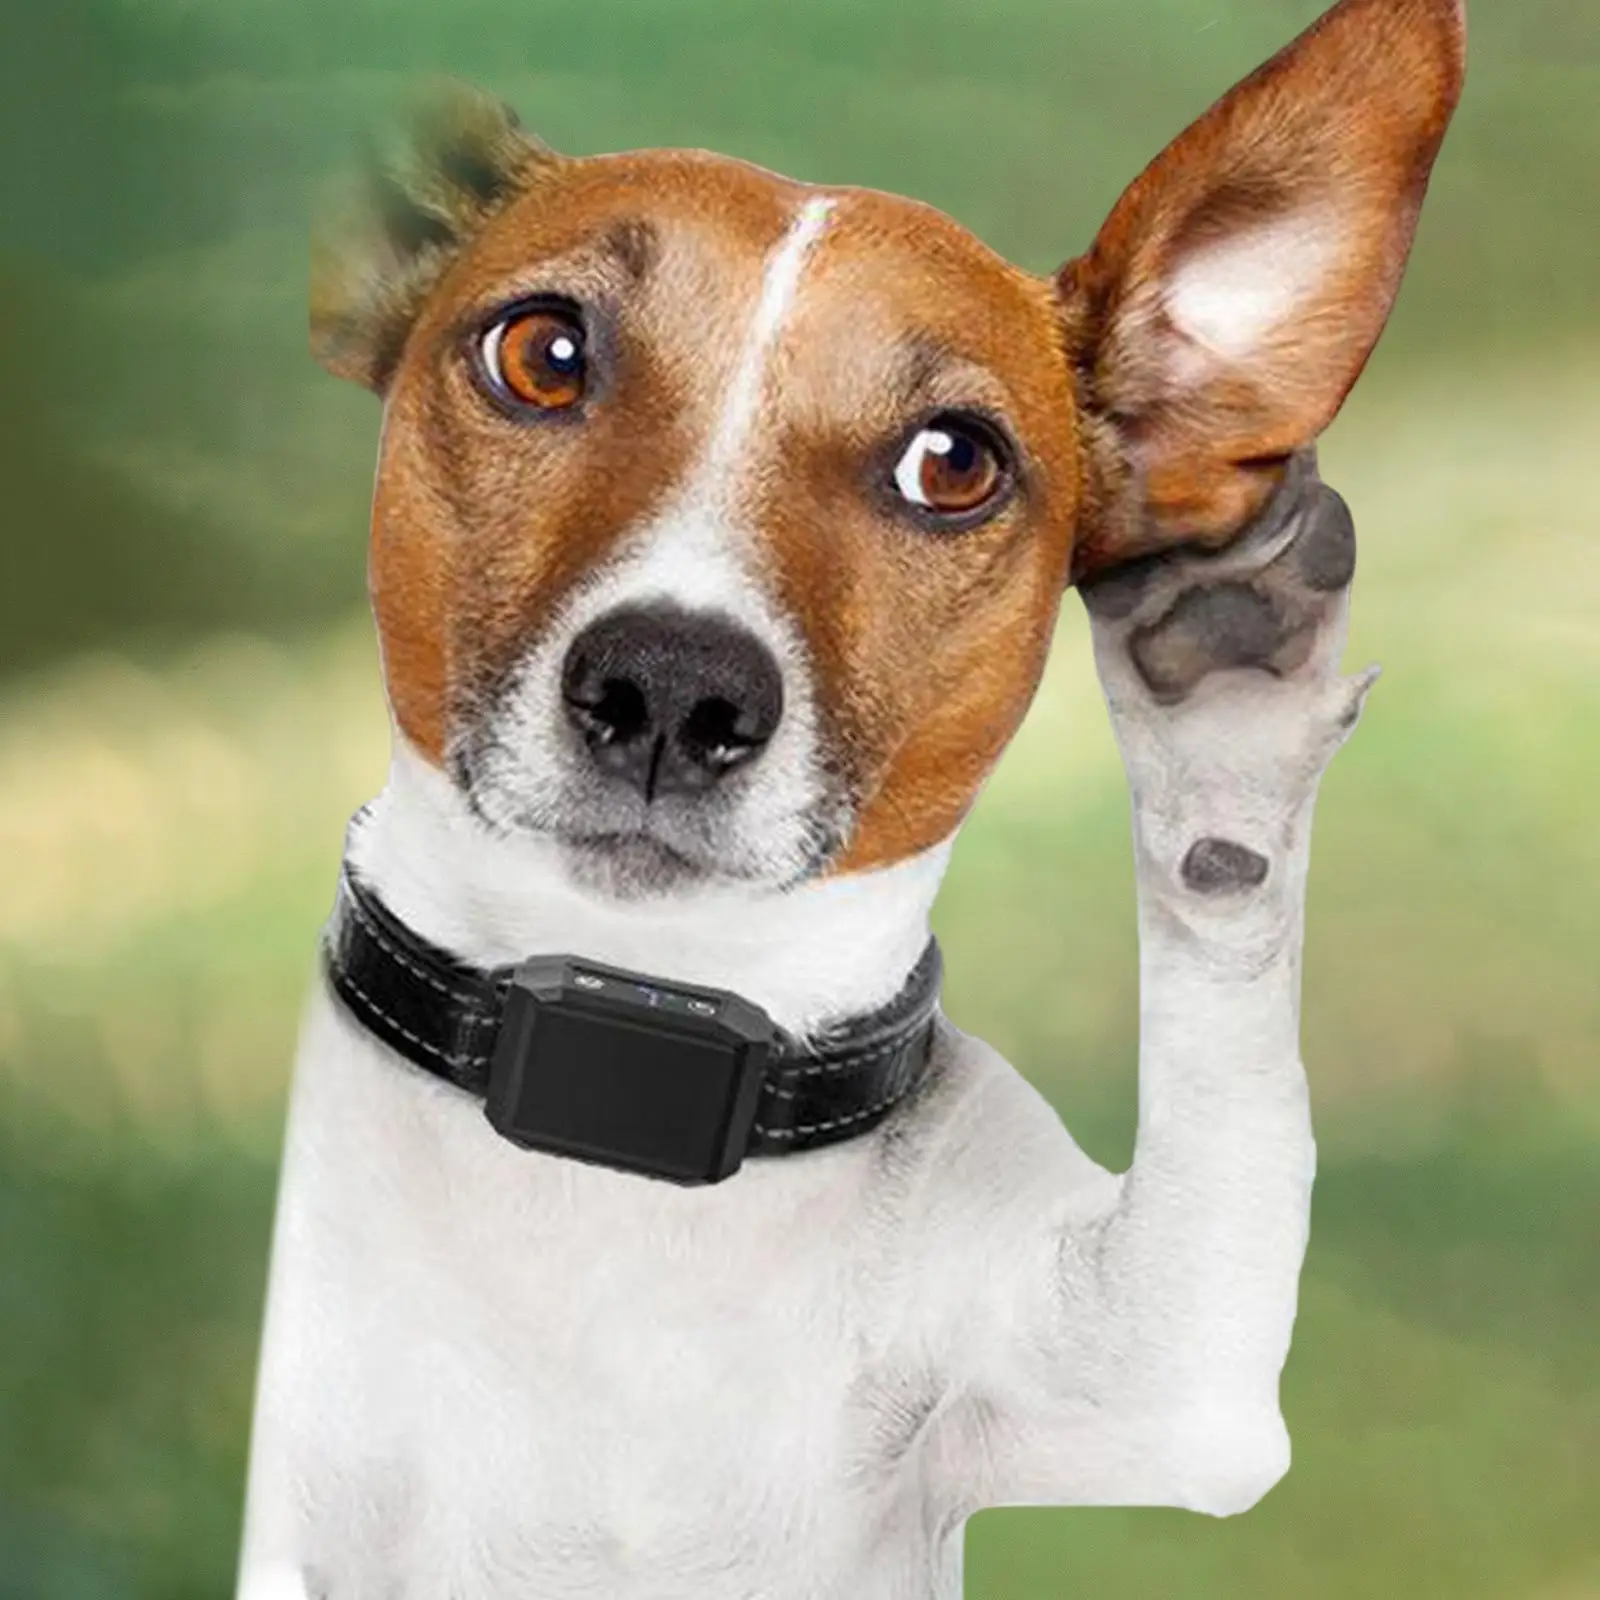 Electric Dog Anti Bark Collar Stop Barking Dog Trainer shock Vibration Adjustable Strap for Dog Dog Training Small Medium